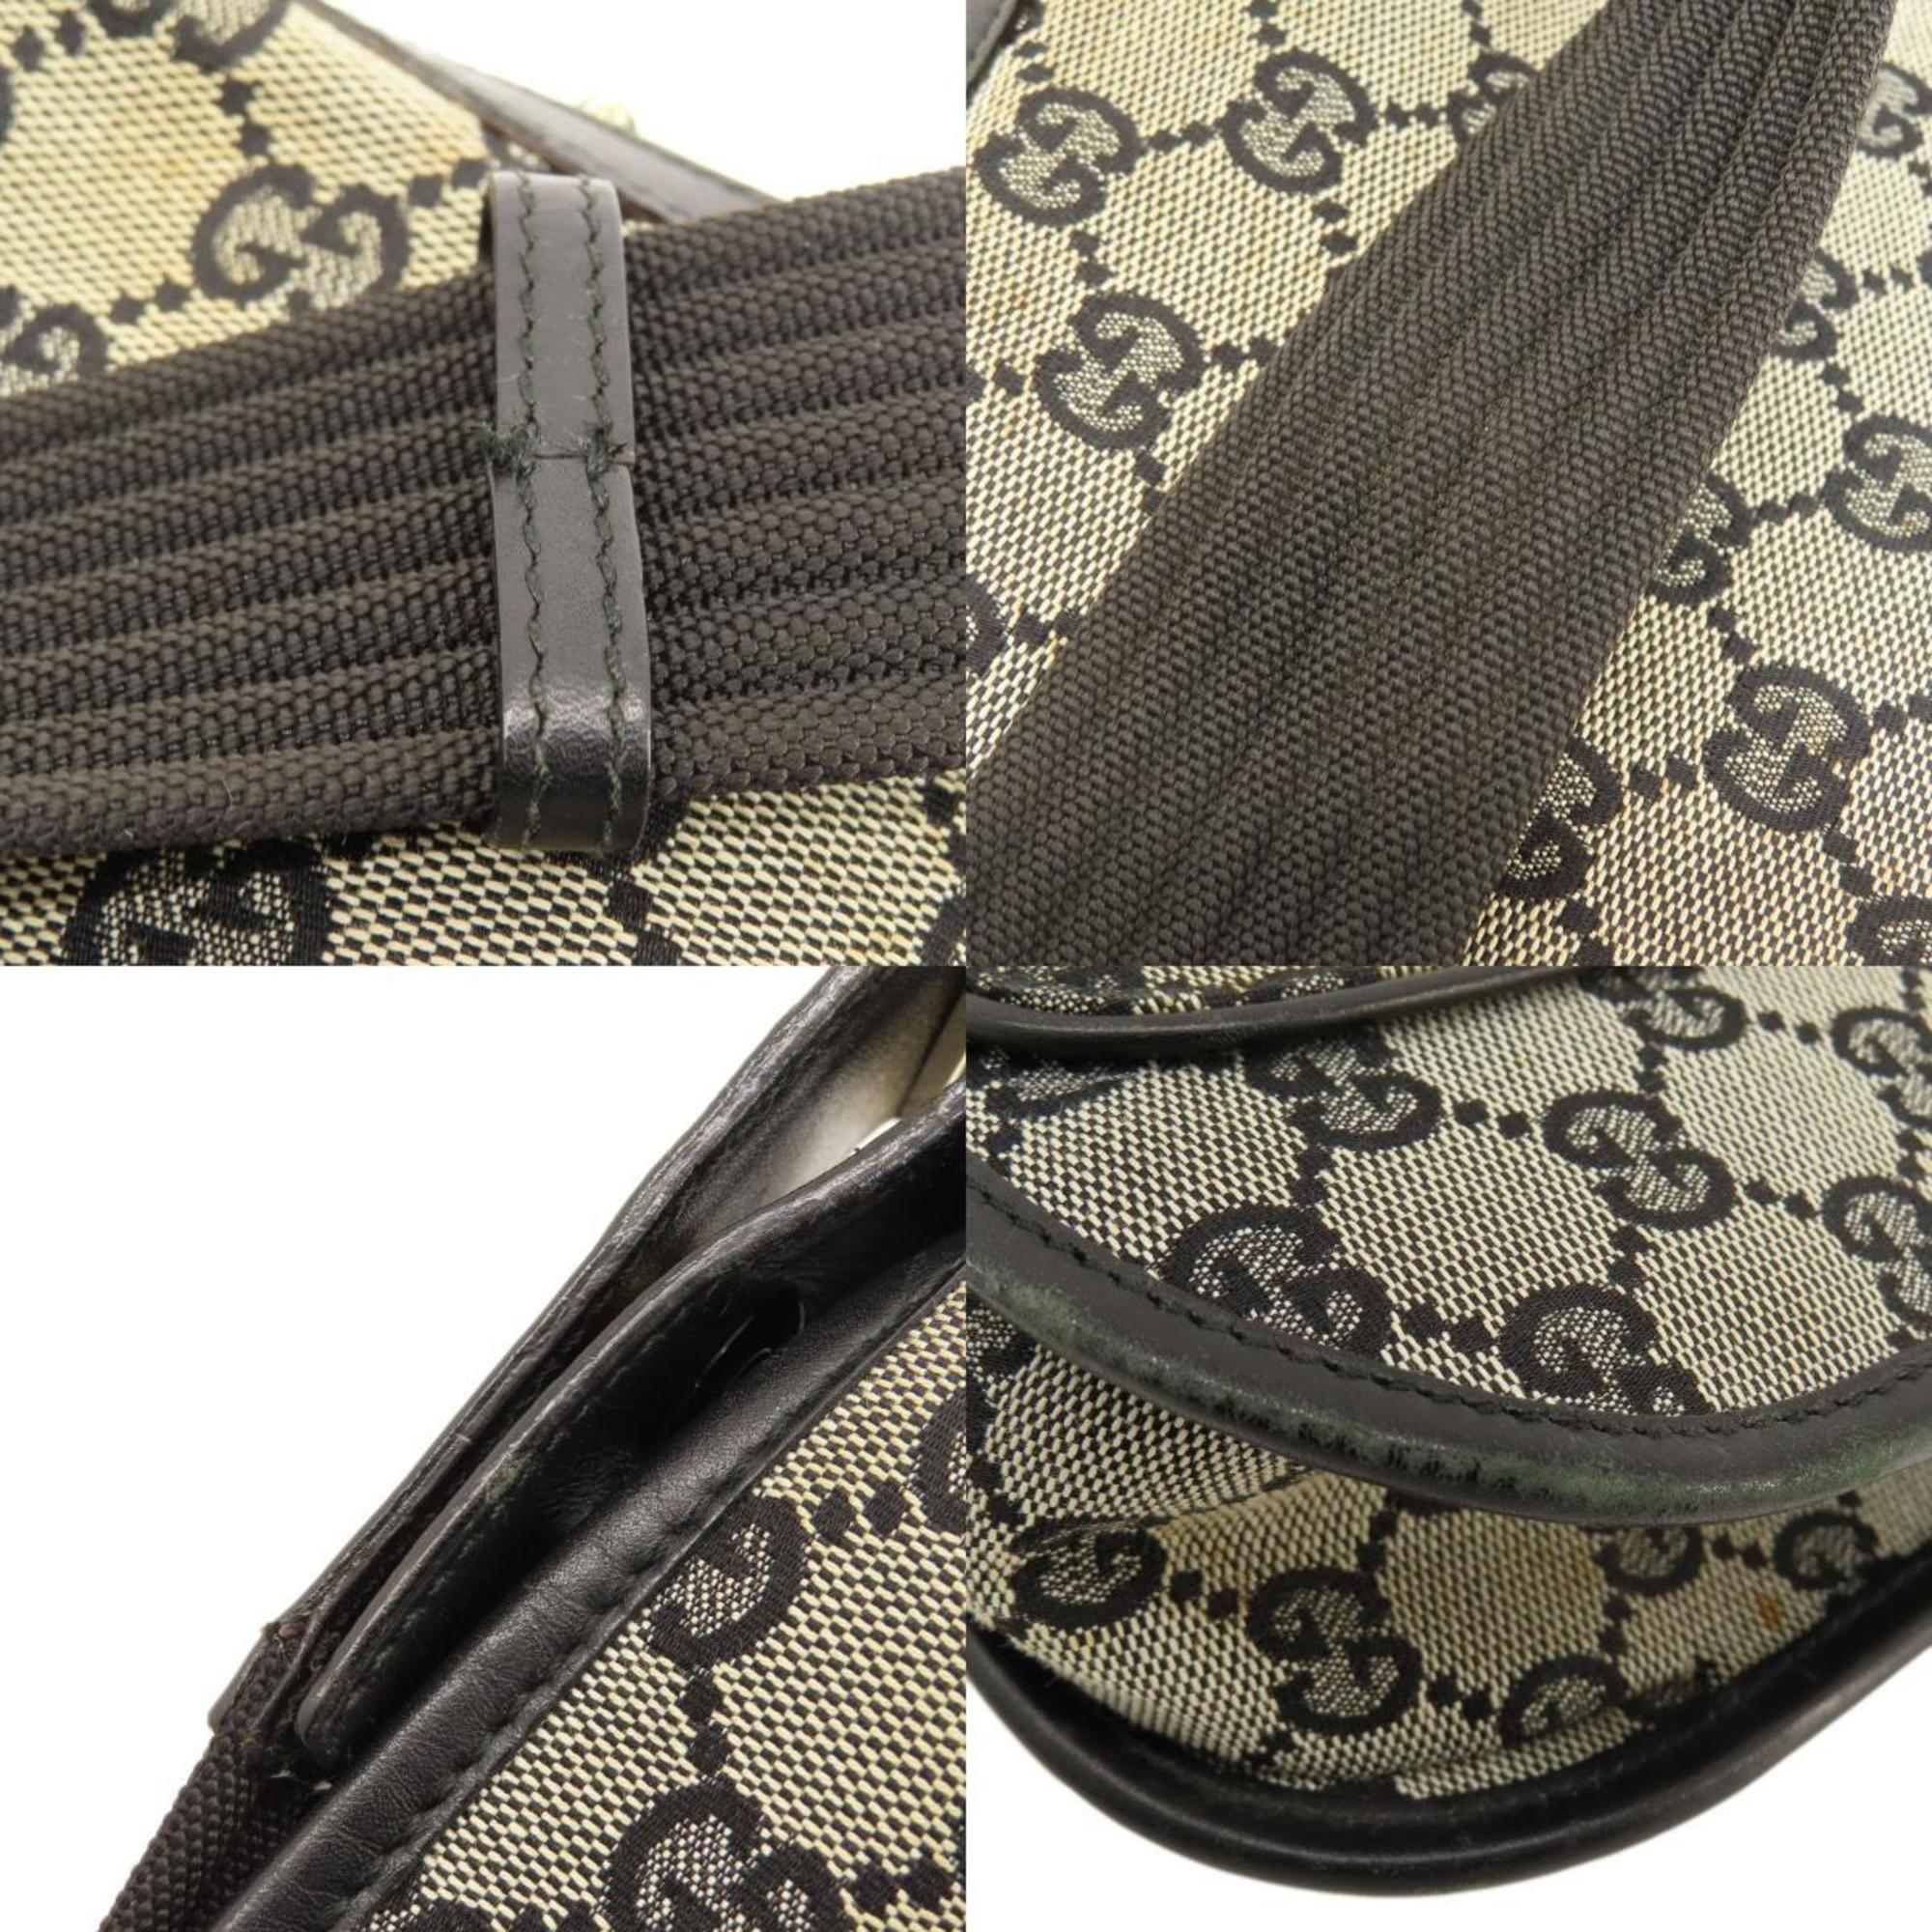 Gucci 001-4098 GG pattern shoulder bag canvas for women